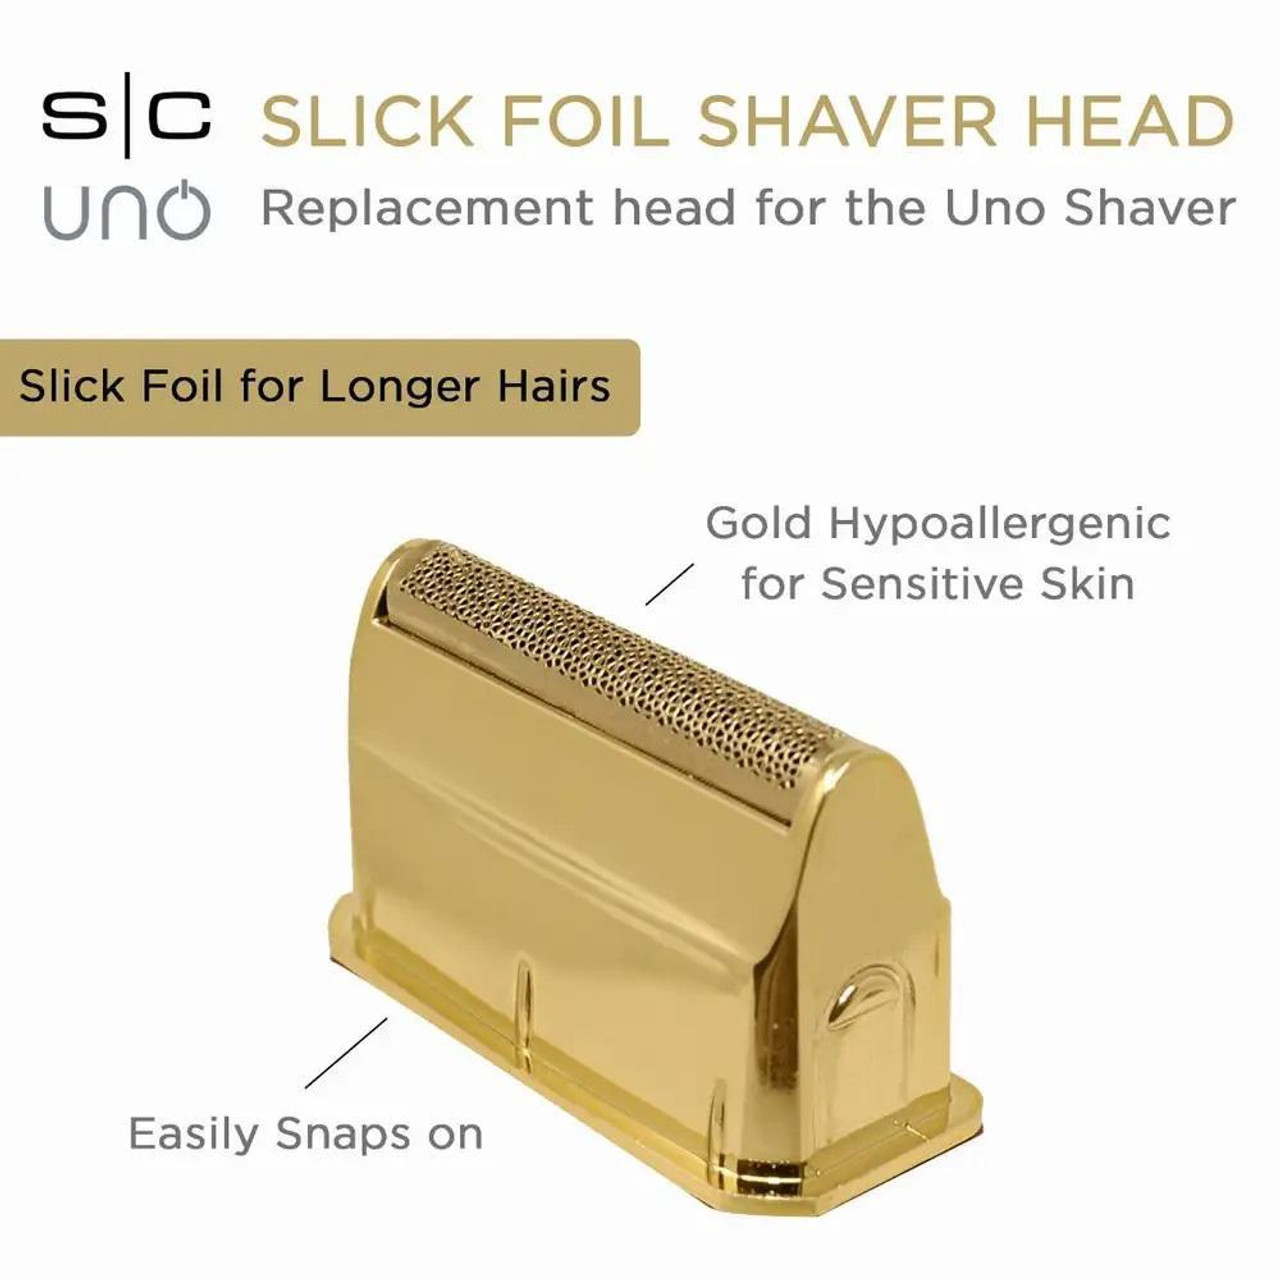 Stylecraft Uno Shaver Replacement Foil Slick